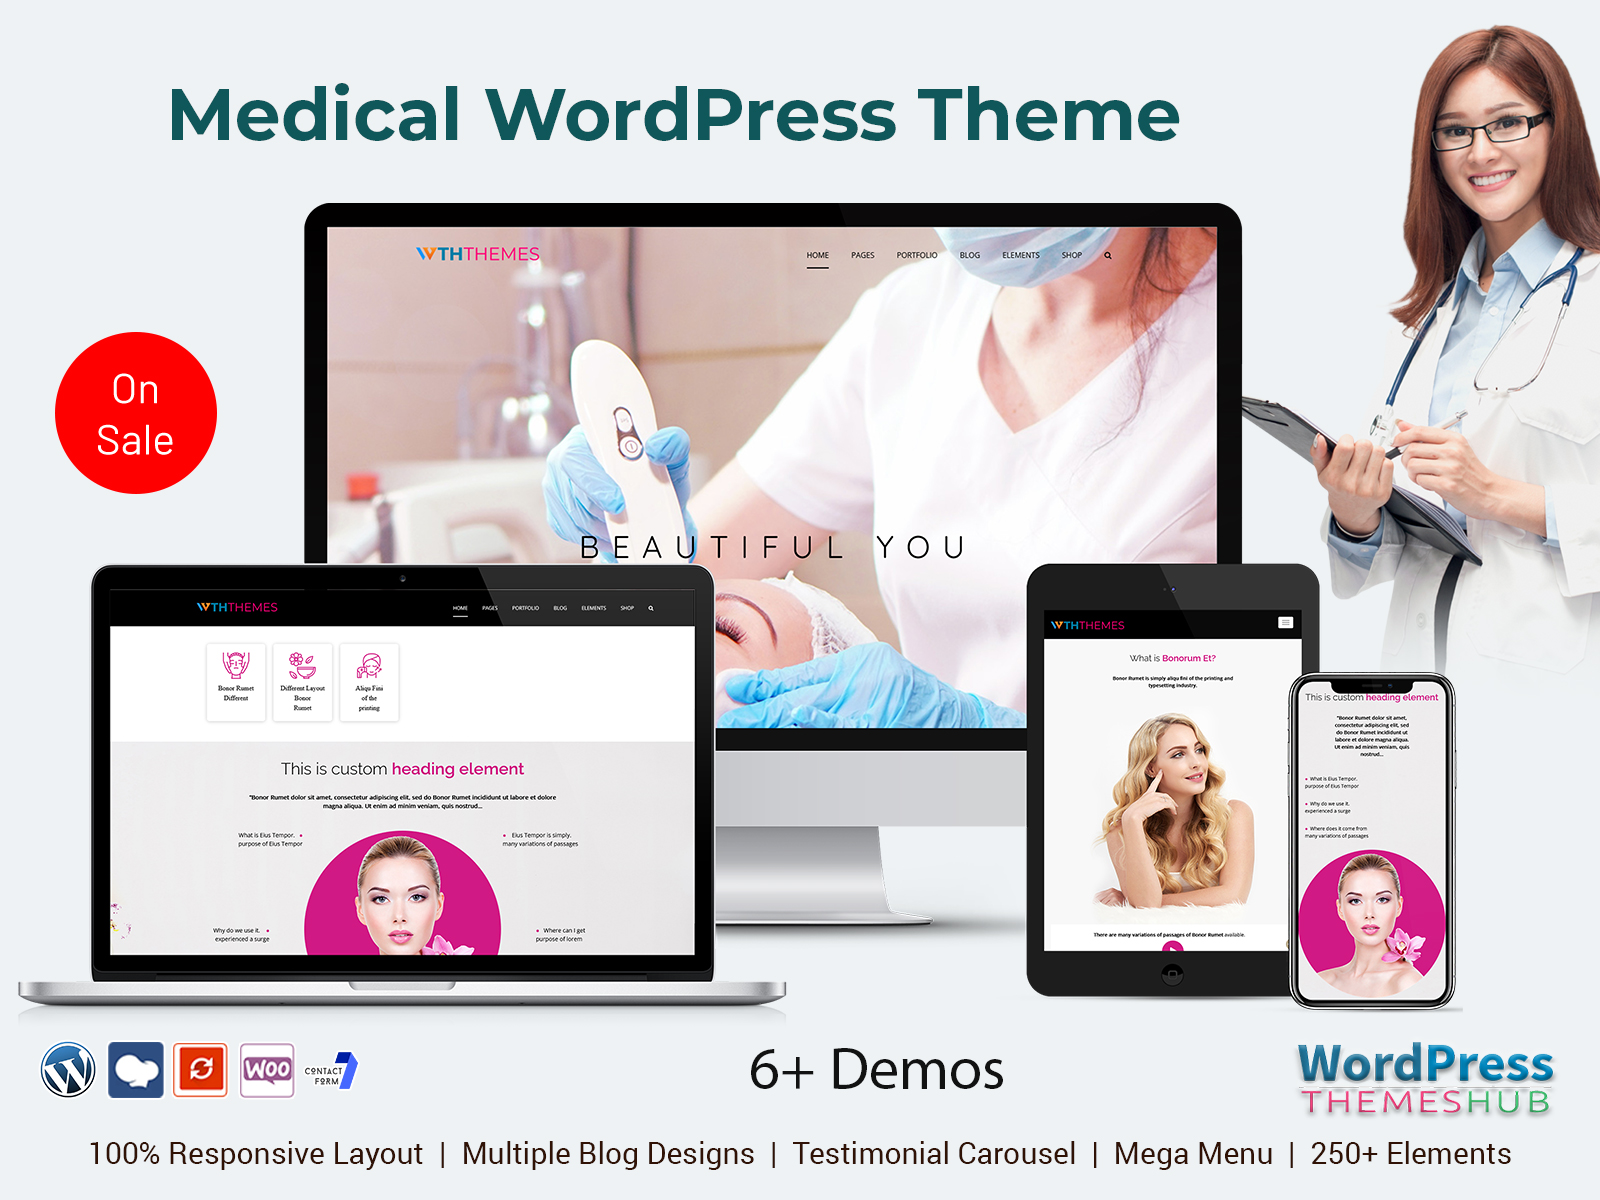 Medical WordPress Theme To Make Hospital Website